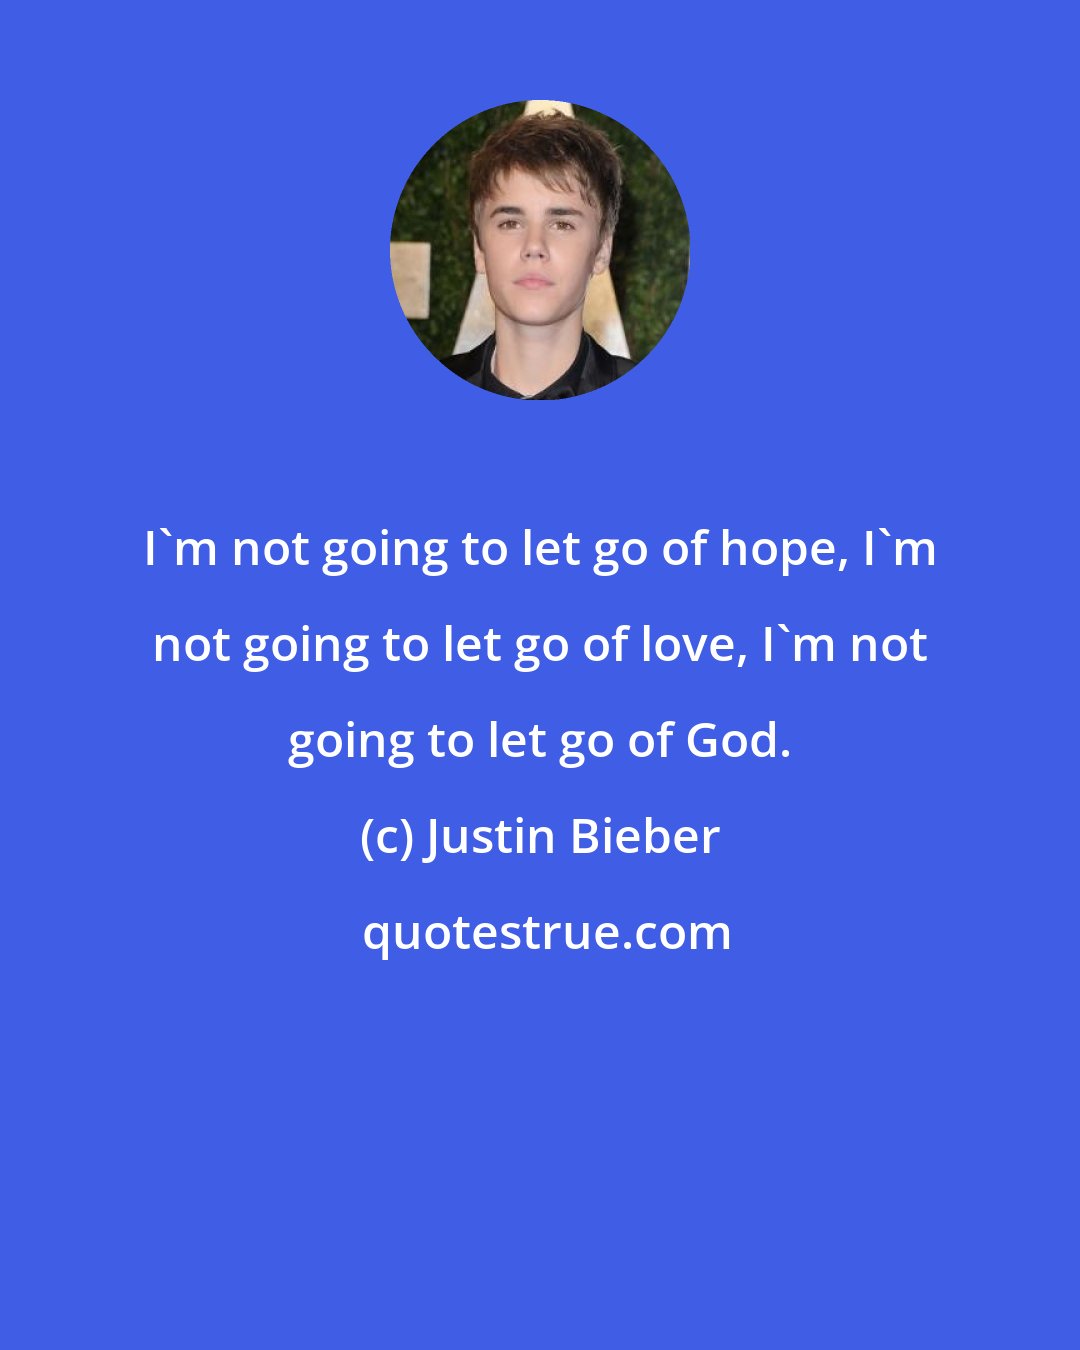 Justin Bieber: I'm not going to let go of hope, I'm not going to let go of love, I'm not going to let go of God.